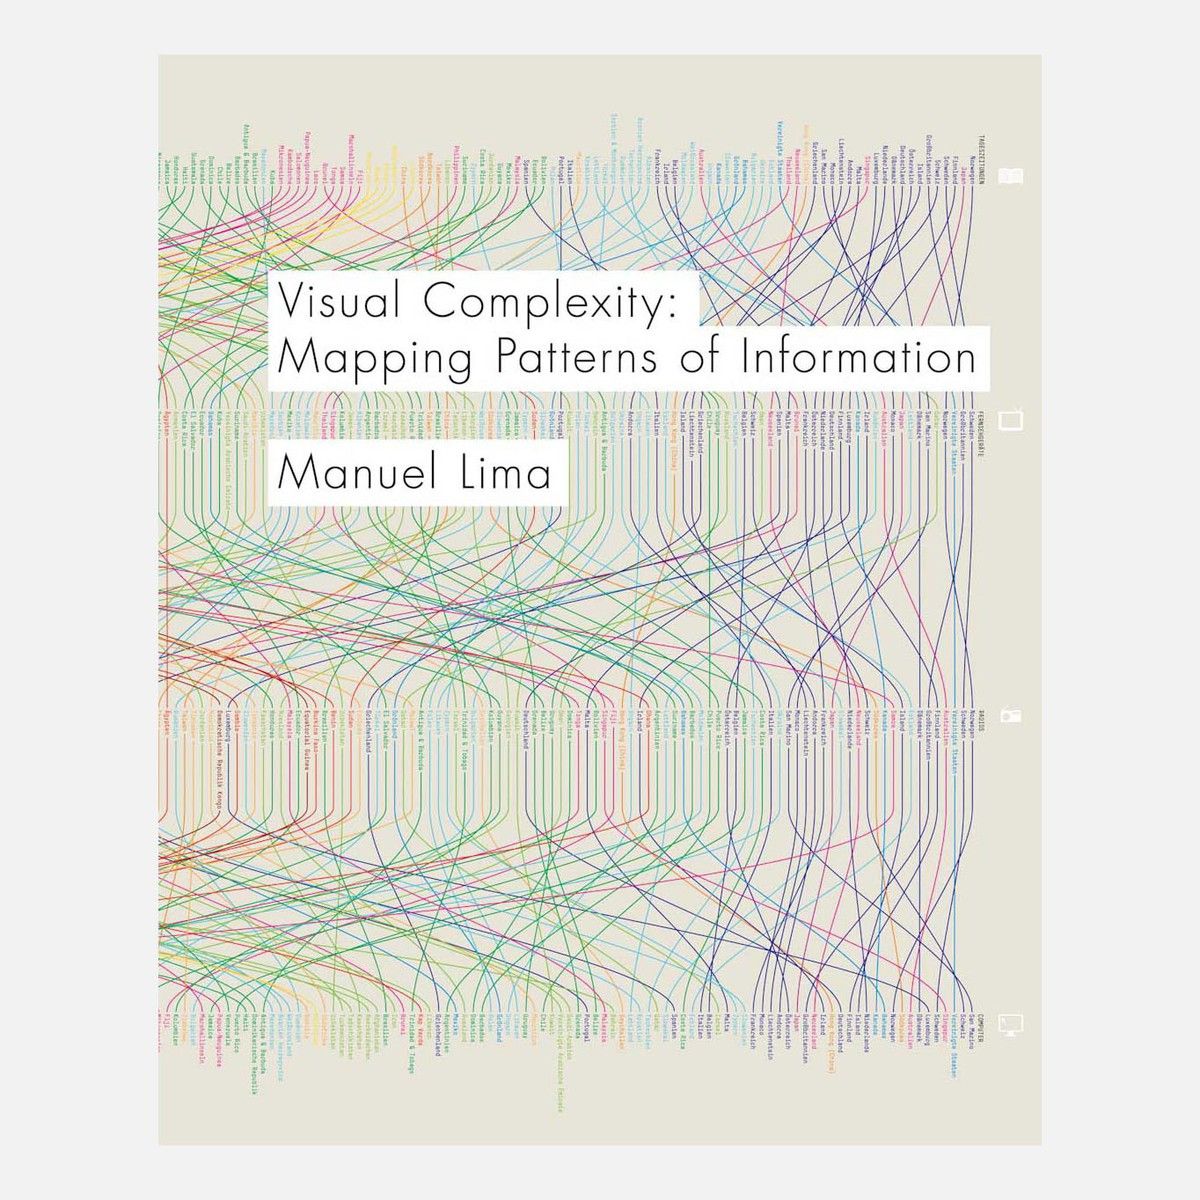 Manuel lima visual complexity pdf